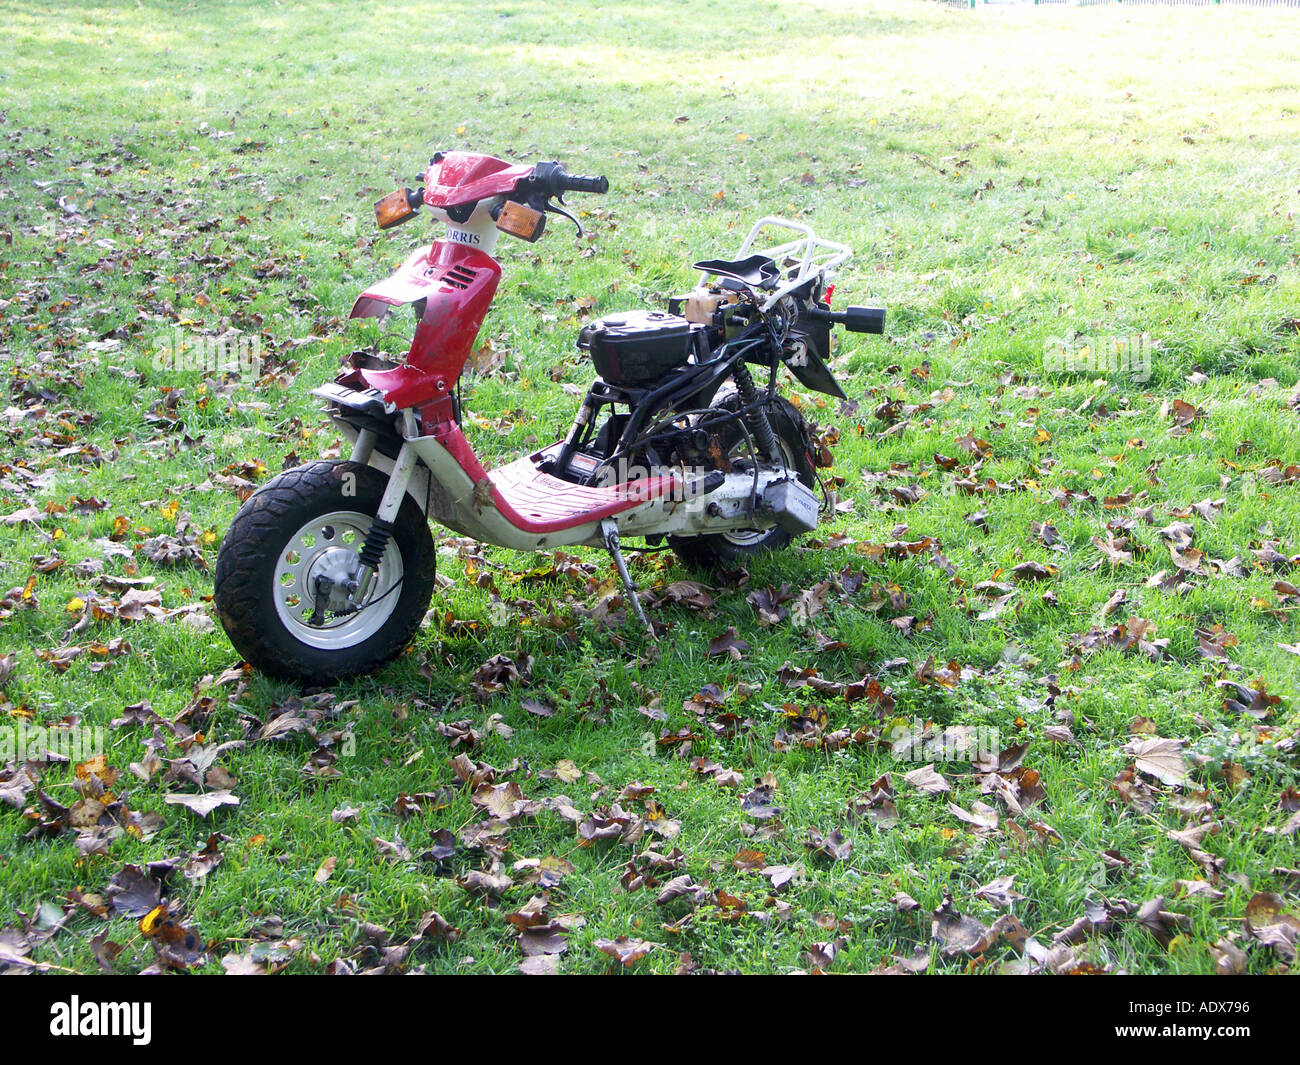 Stolen Scooter abandoned on parkland Tamworth Stock Photo - Alamy